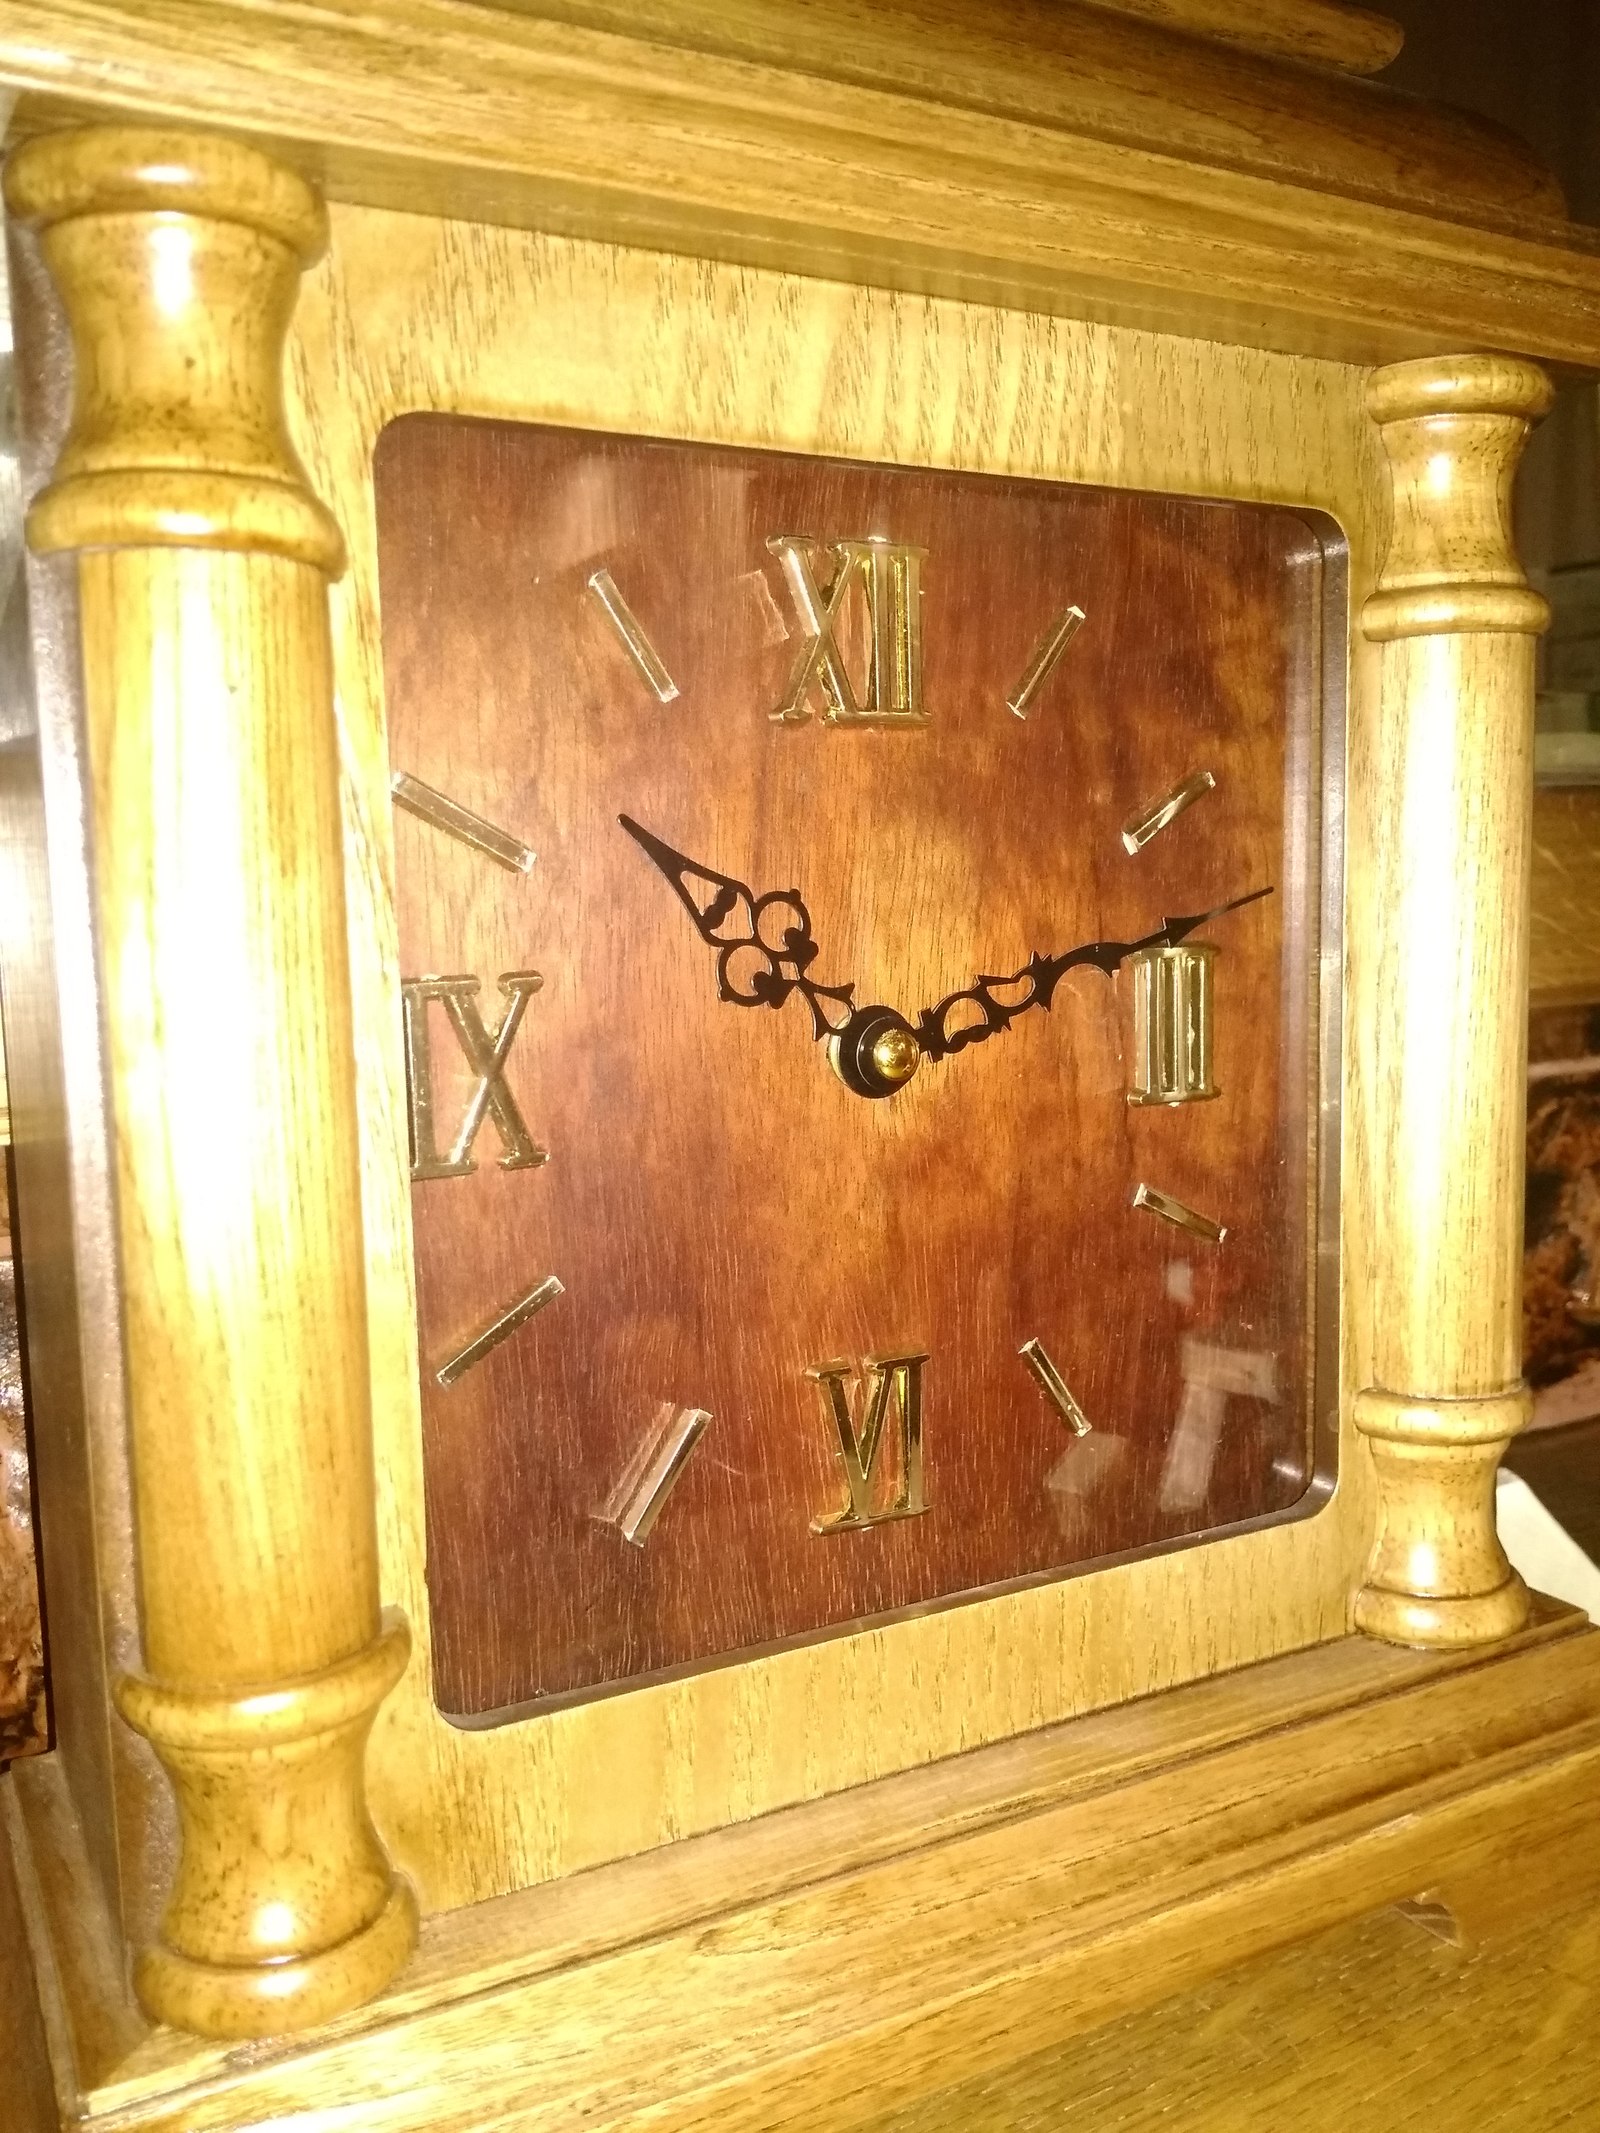 Desktop clock. (No process) - My, Needlework without process, Handmade, Woodworking, Clock, Crafts, Longpost